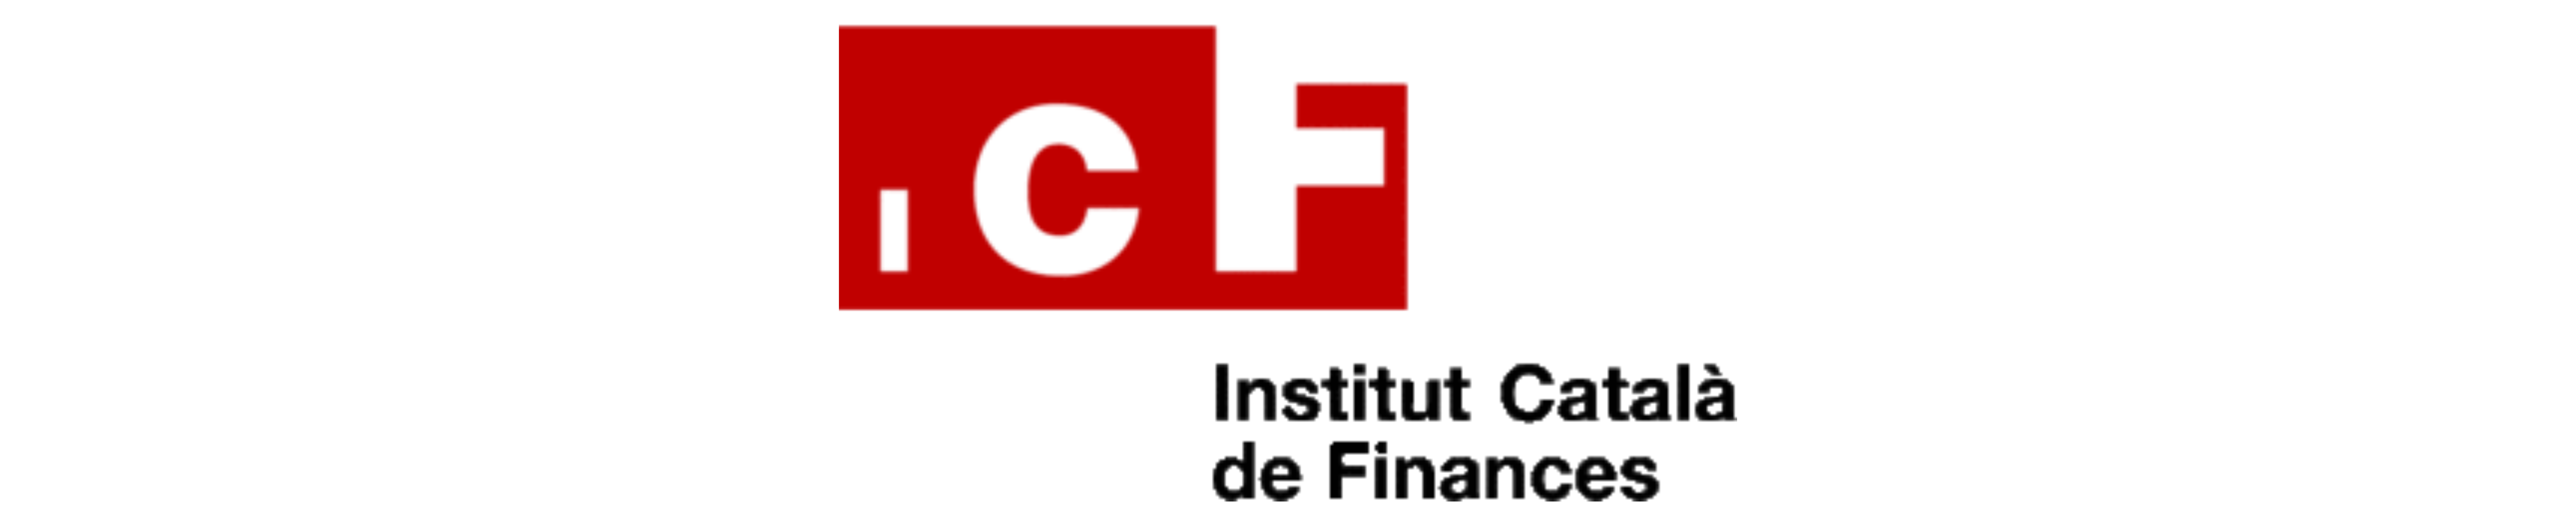 ICF Logo ok